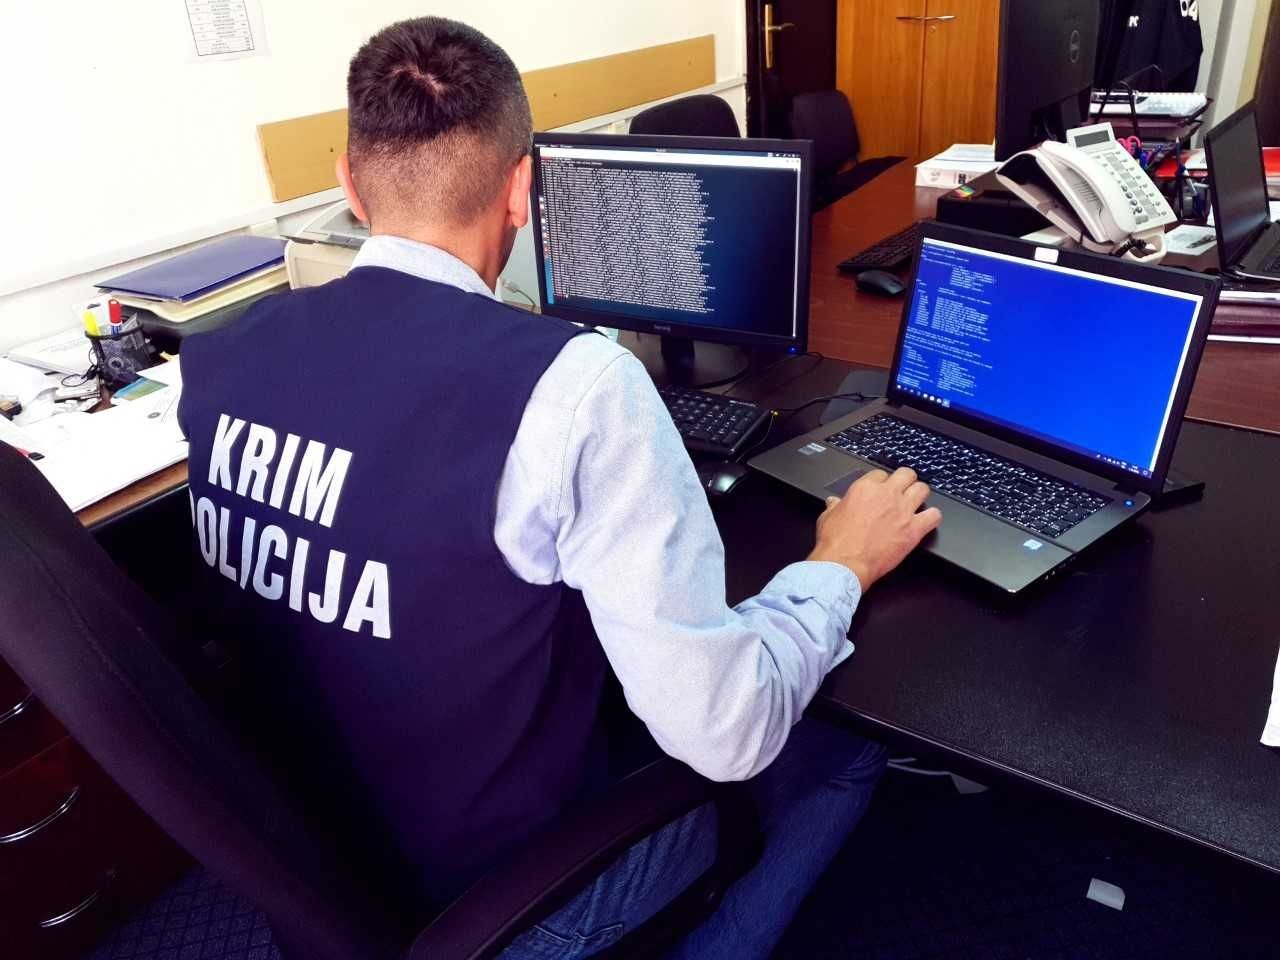 krim-policija-onlineistraga.jpg